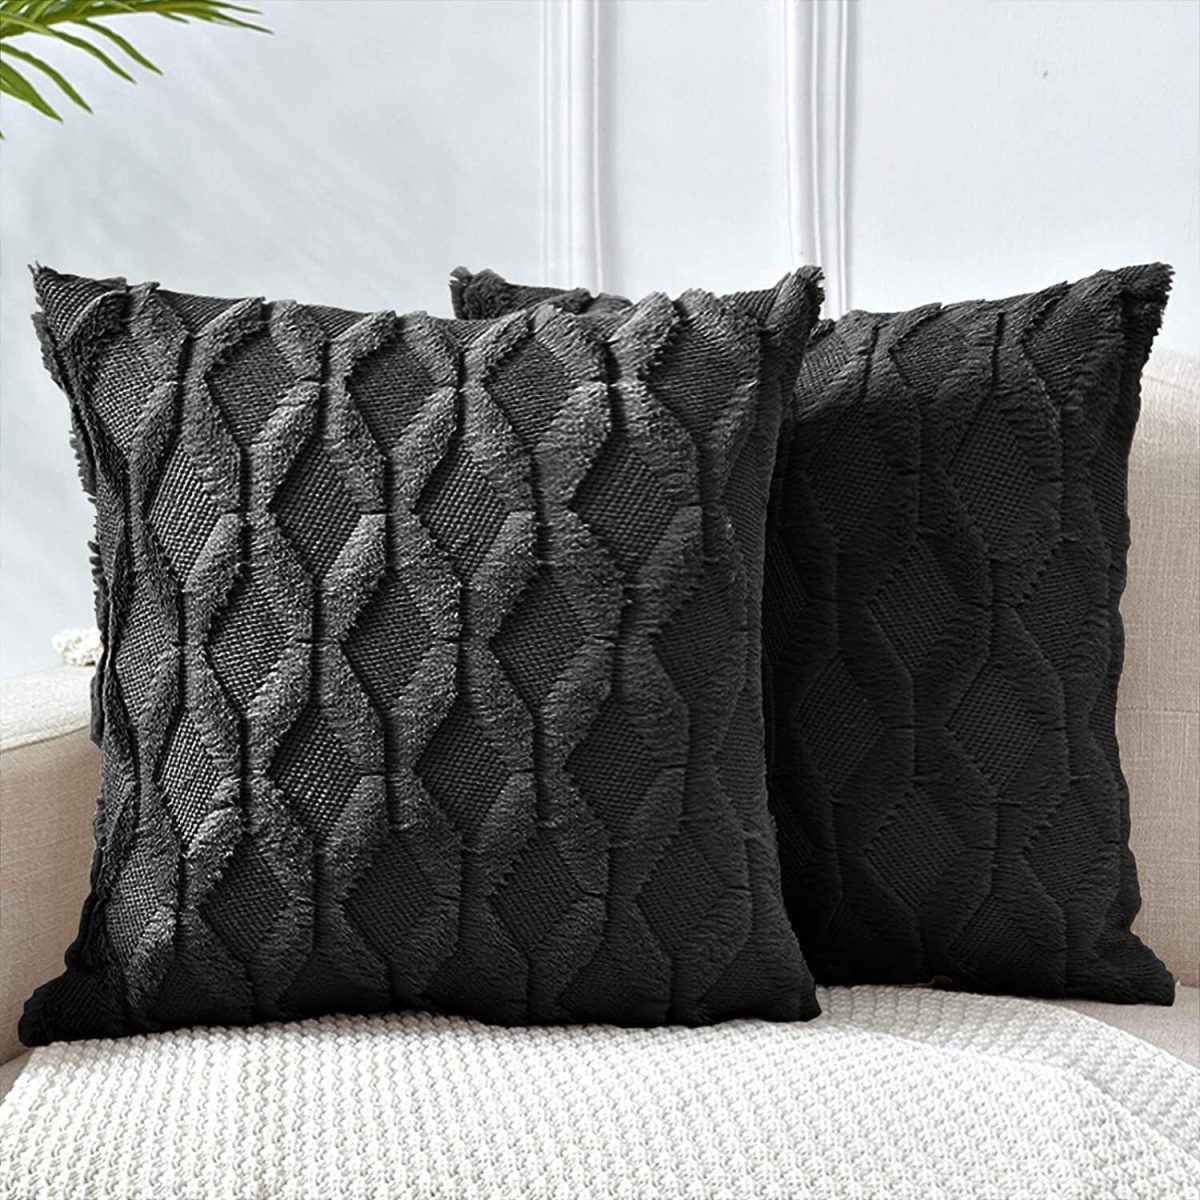 2 Pack Decorative Boho Throw Pillow Covers 45 x 45 cm